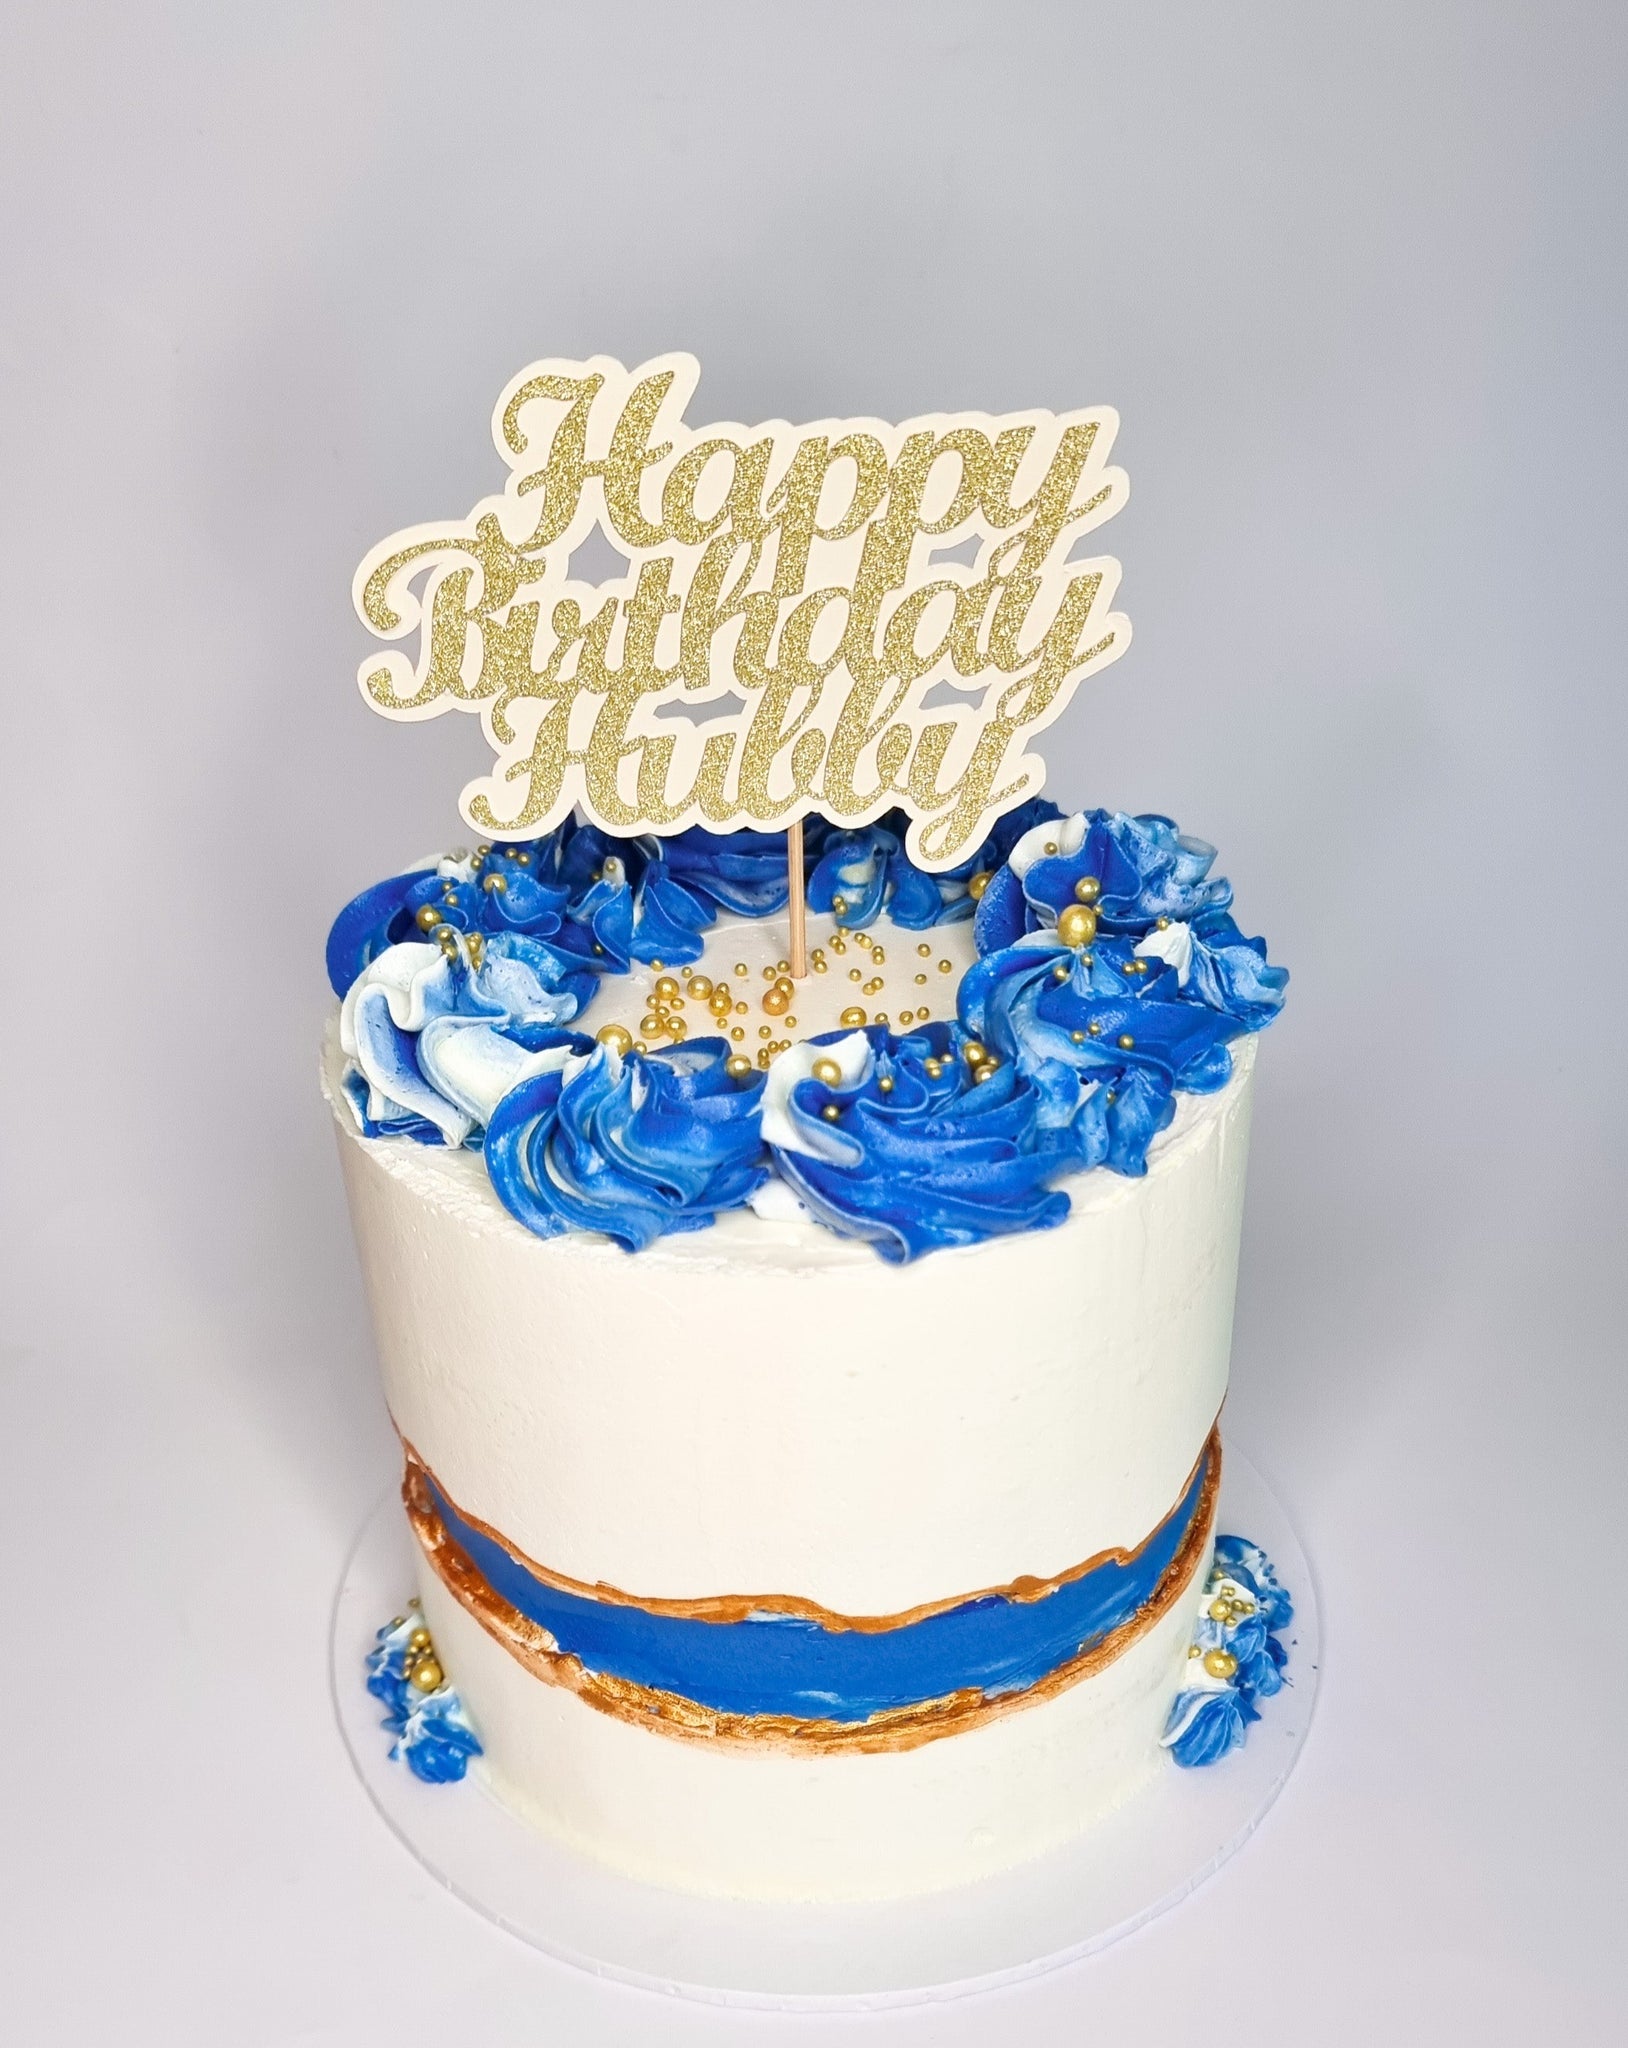 Cool fault line cake - Doofies Cakes | Buy Cakes Online in Abuja, Nigeria |  Get Valentine Cakes